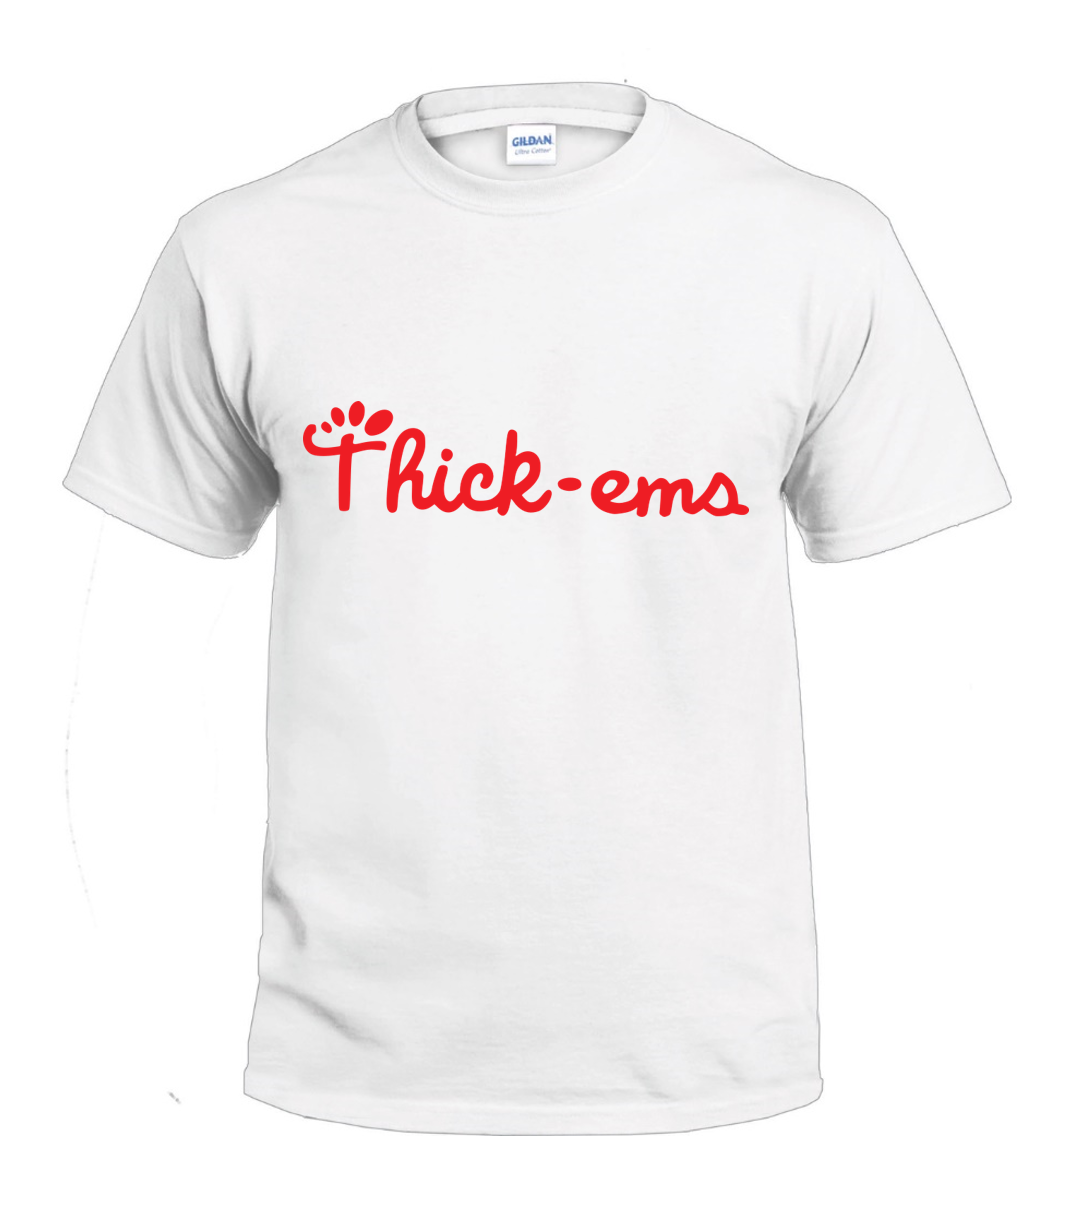 Thick-ems t-shirt